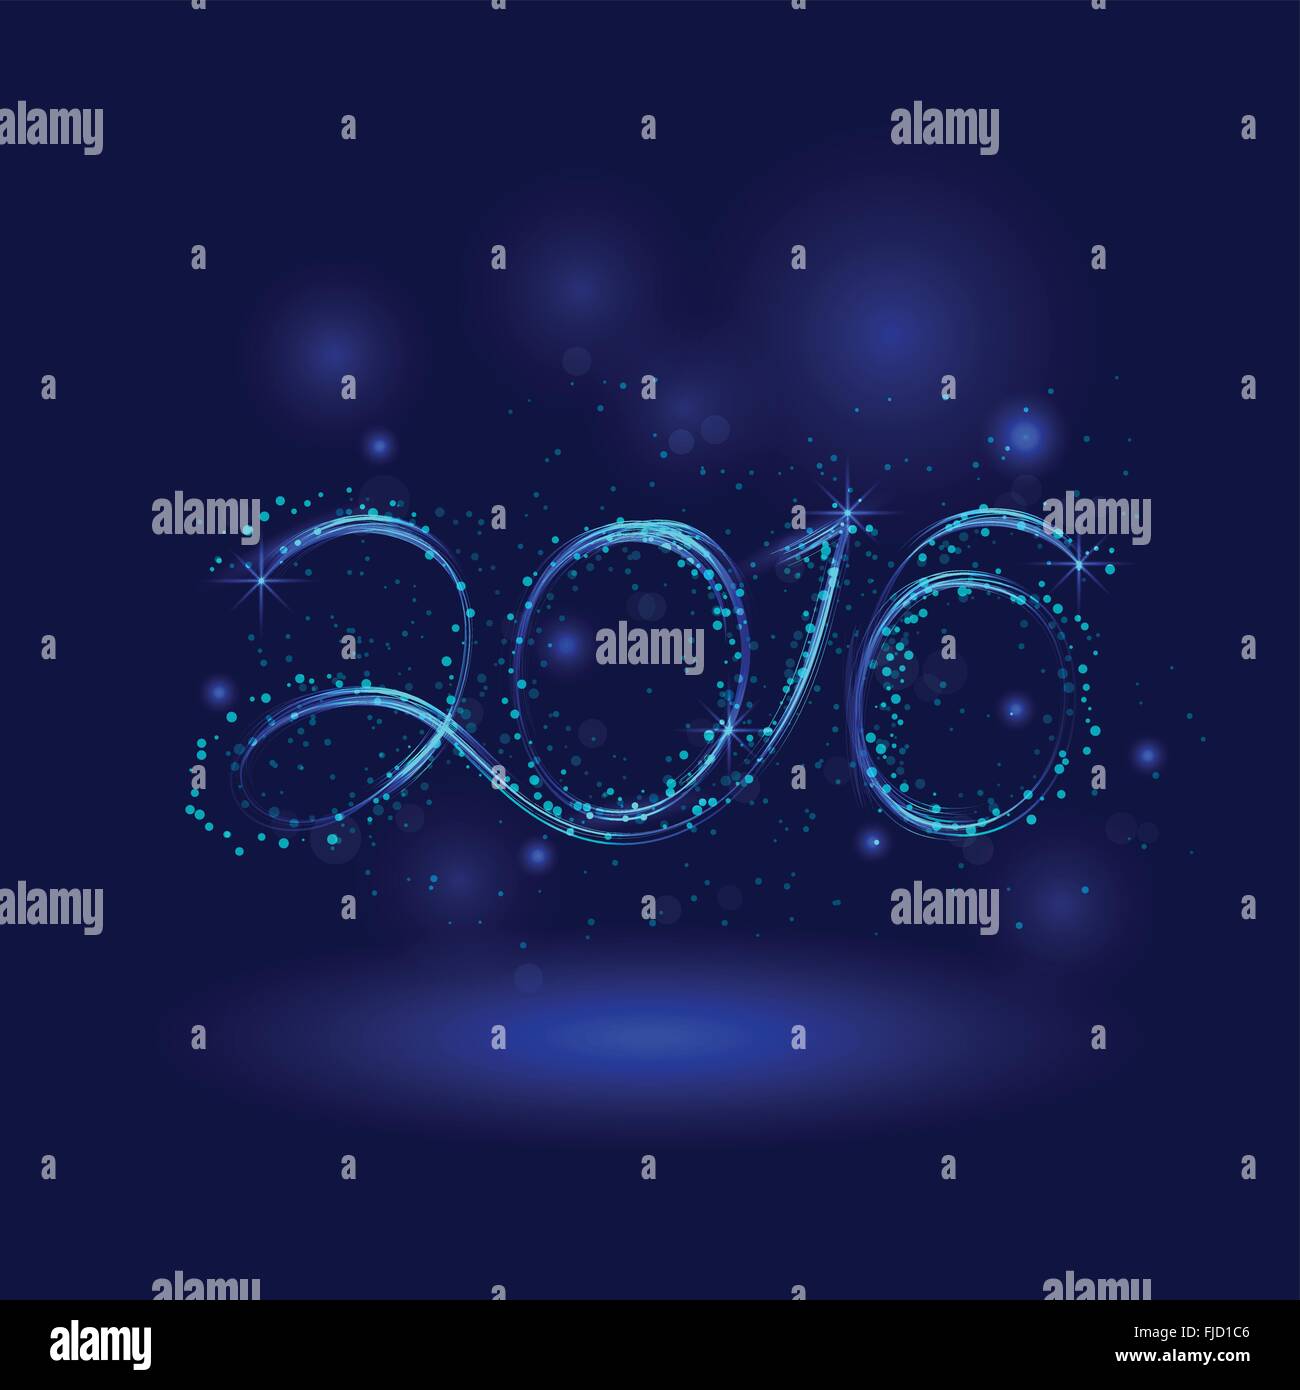 Happy New Year 2016.Greeting Kartendesign. Vektor-Illustration für Ferien-Design. Party Plakat, Grußkarte Stock Vektor